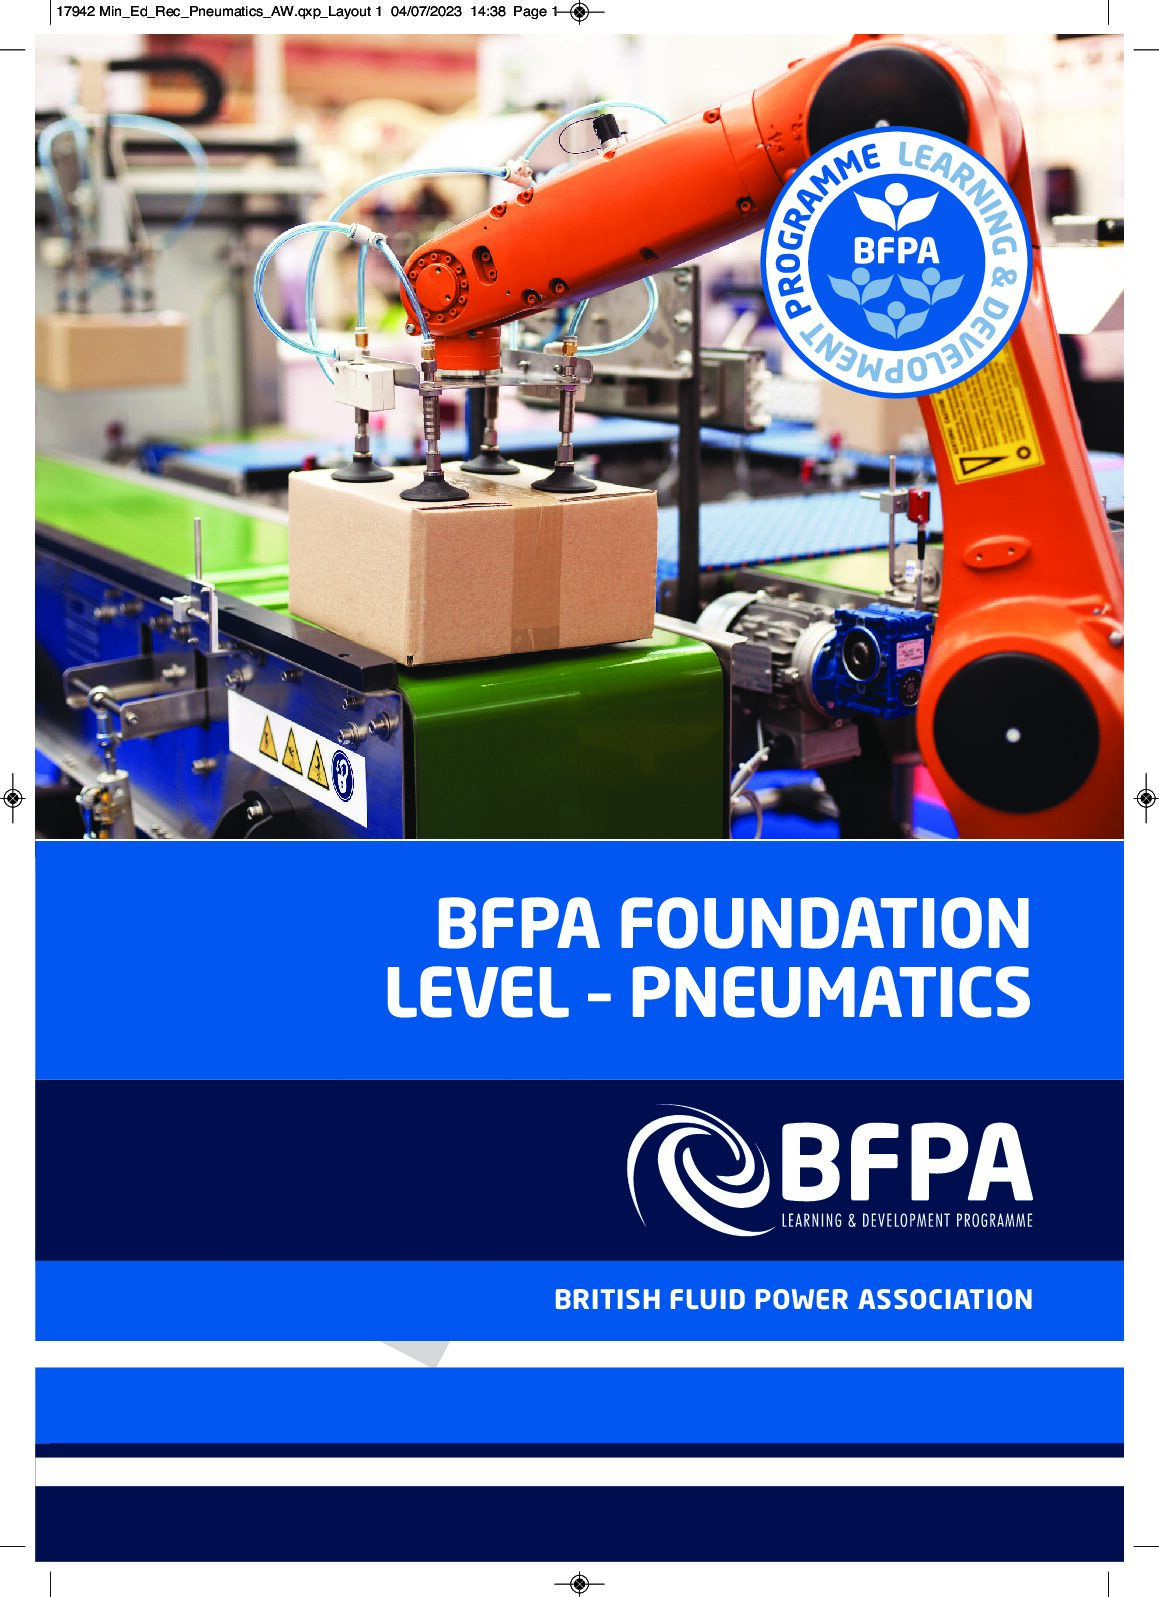 BFPA Foundation Level – Pneumatics Course Reference Manual